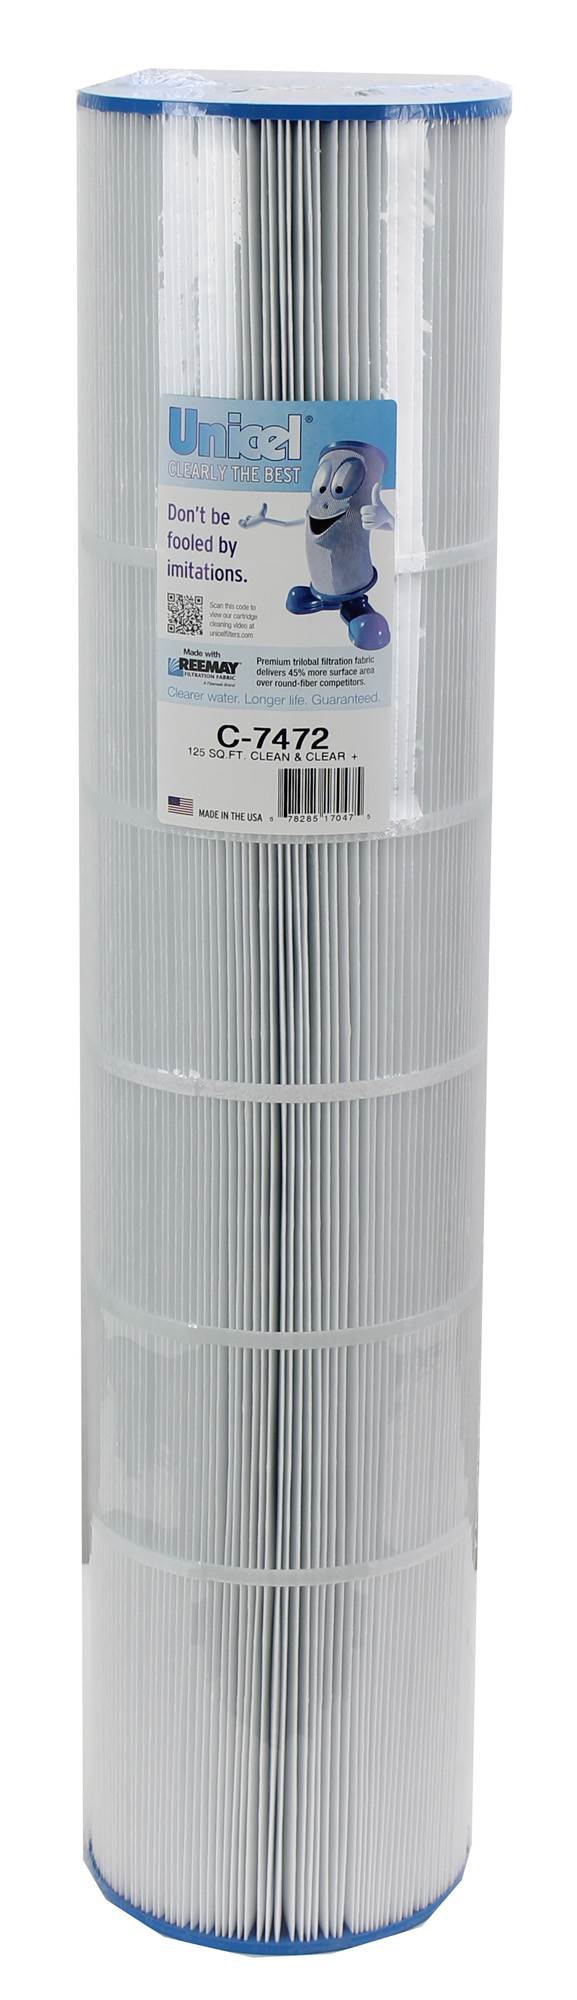 Unicel C-7472 Clean & Clear 520 Cartridge Filter C7472 PCC130 FC-1978 (2 Pack)